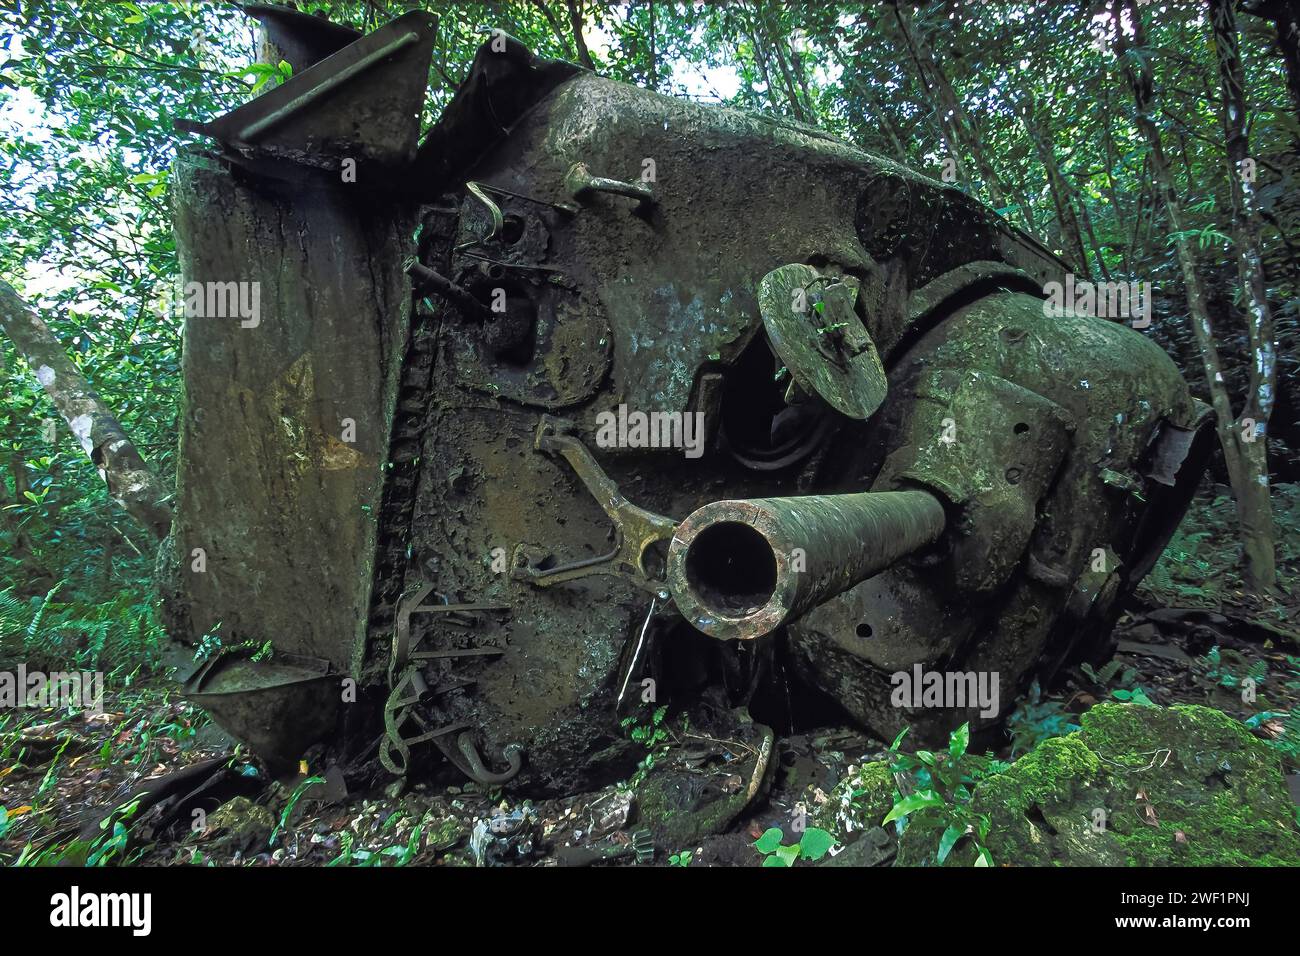 Destroyed WW2 US Sherman M4 tank in the jungle, Battle of Peleliu 1944, Pacific War, Peleliu, Palau Islands, Micronesia. Stock Photo